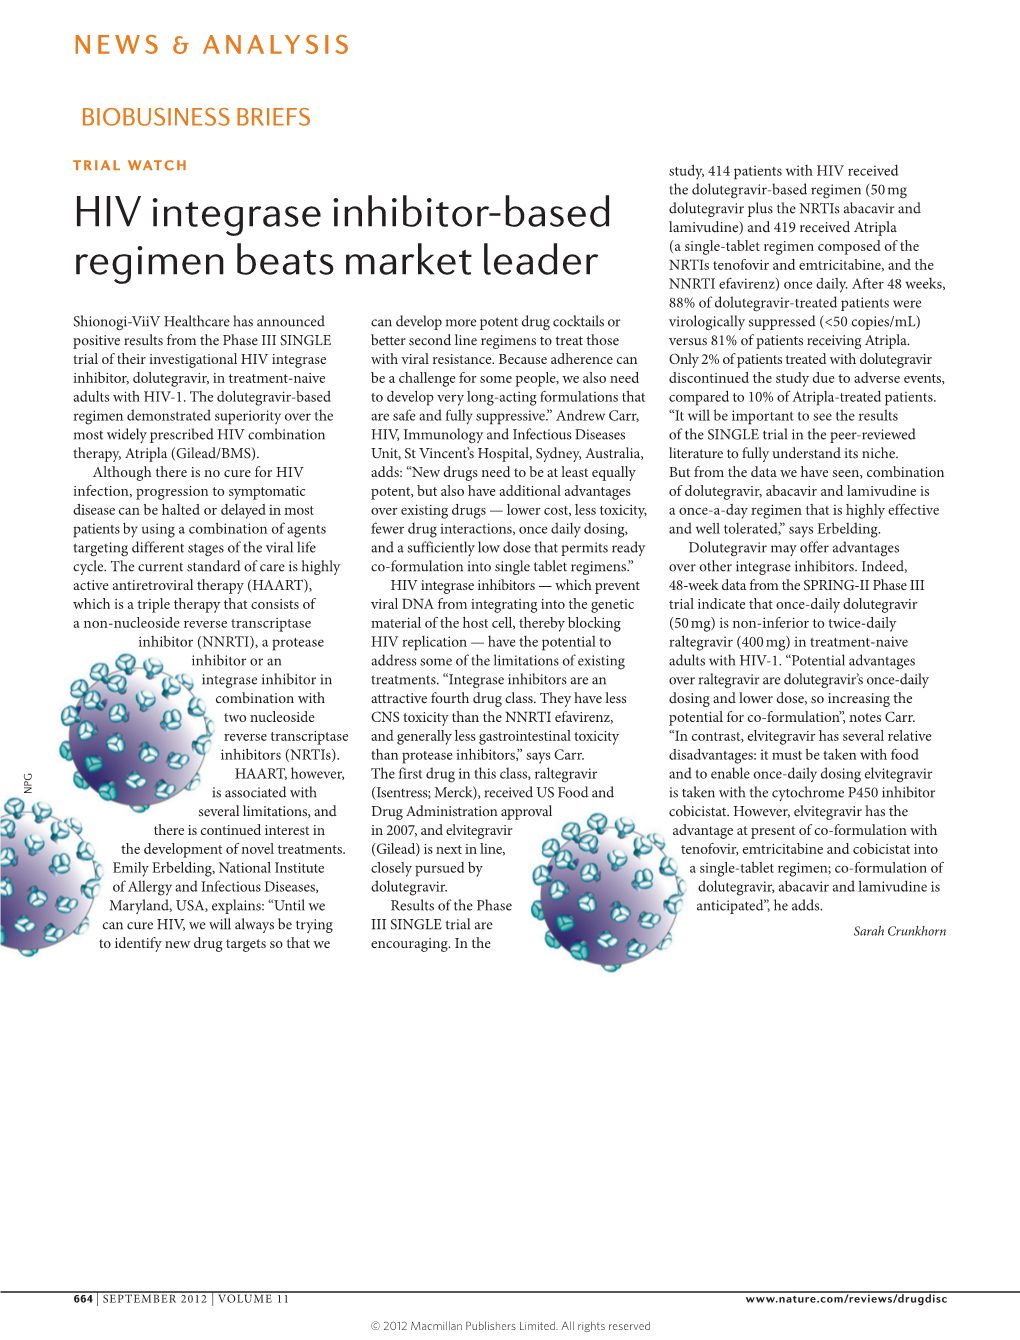 HIV Integrase Inhibitor-Based Regimen Beats Market Leader